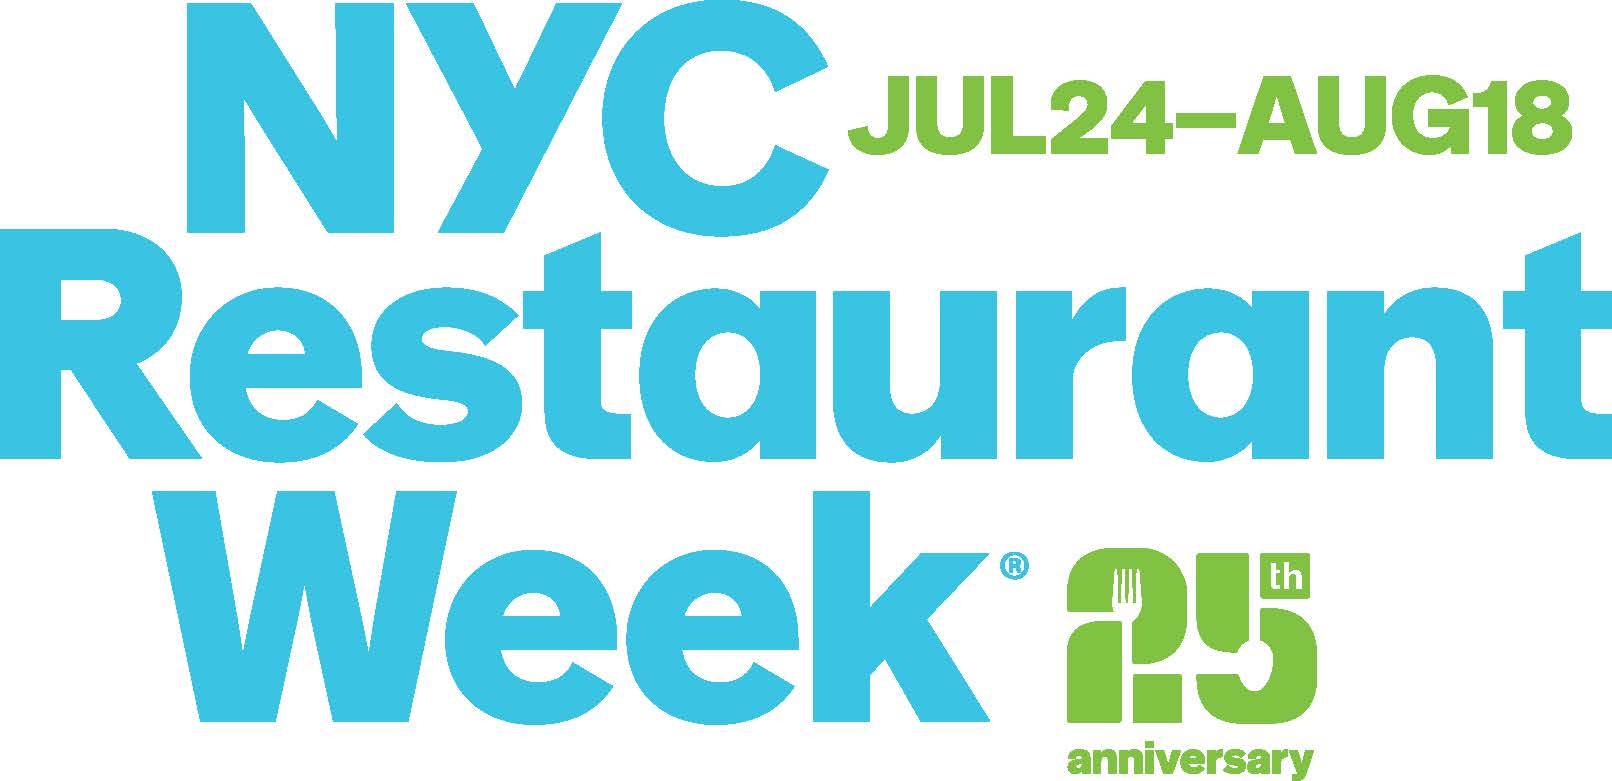 NYC Restaurant Week kicks off in the Big Apple News Breaking Travel